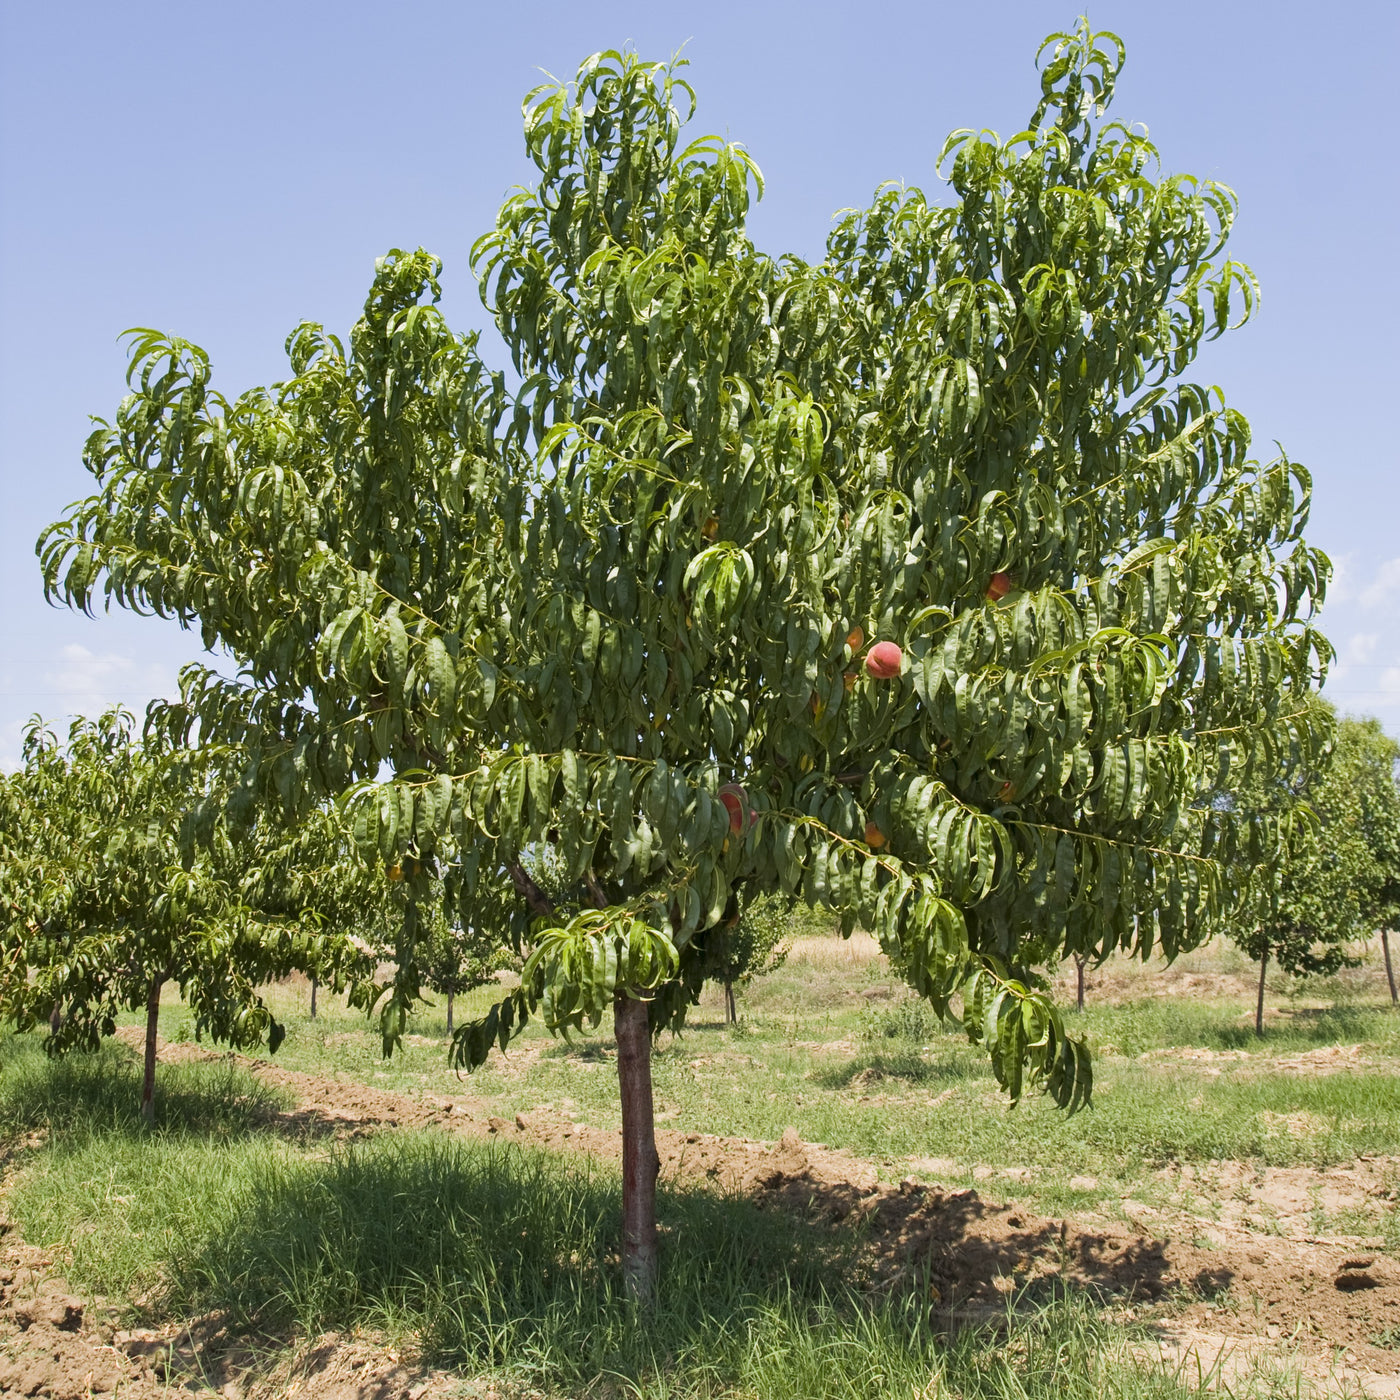 Belle of Georgia Peach Tree